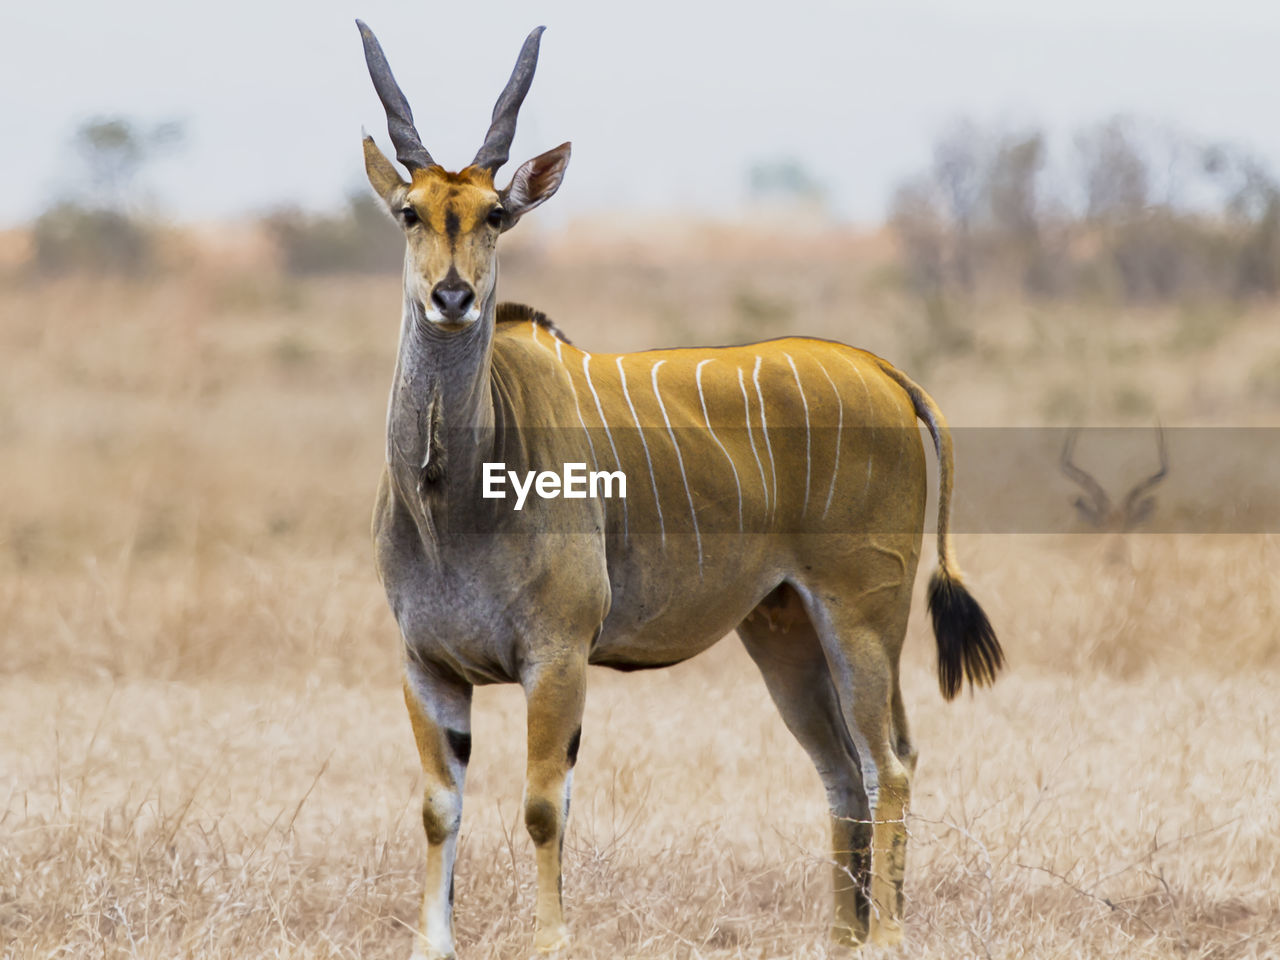 Portrait of antelope standing on field